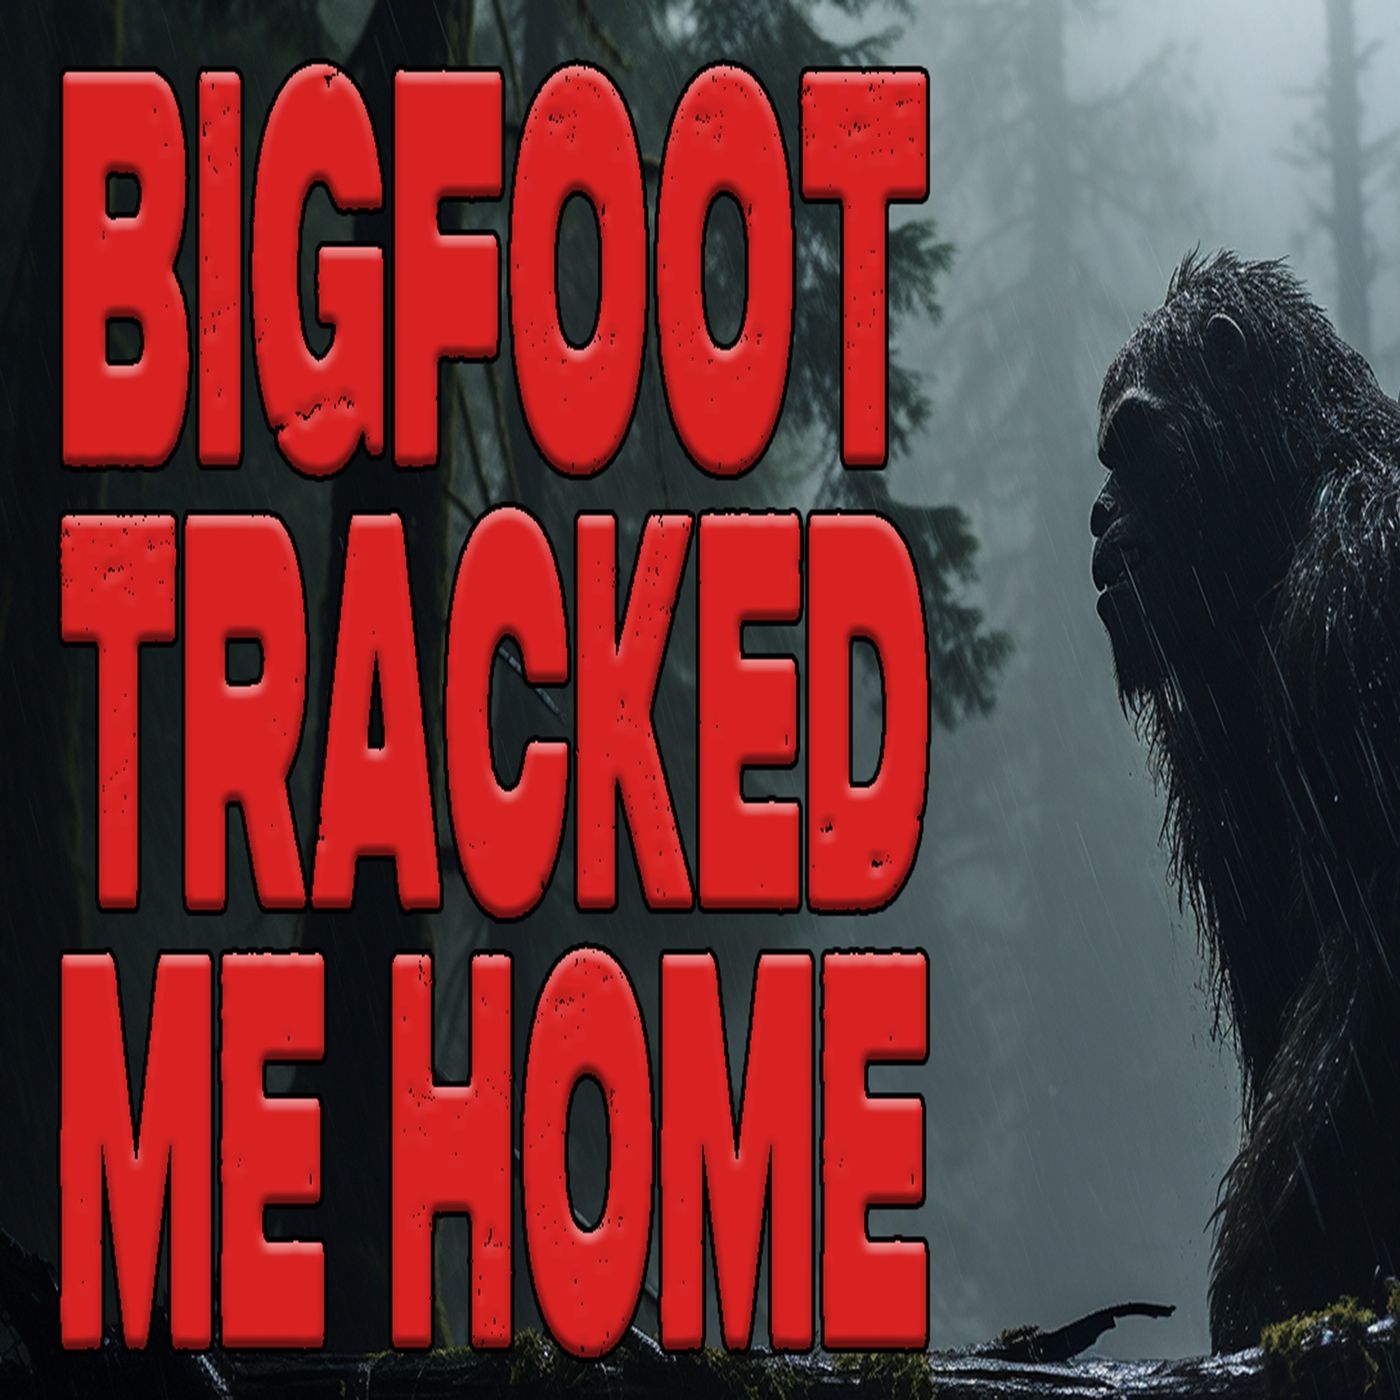 Bigfoot Tracked Me Home